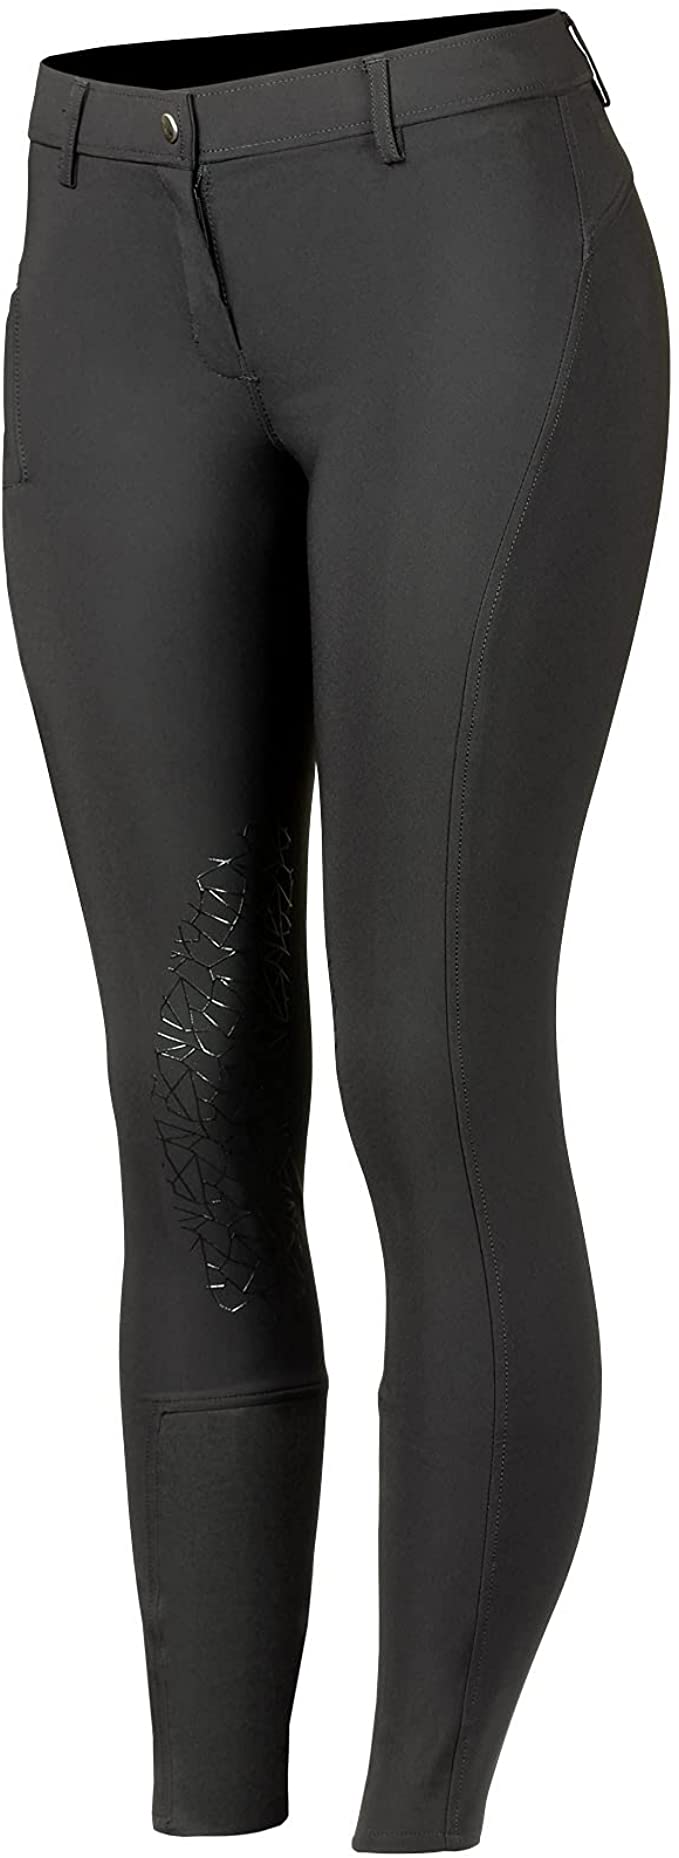 Horze Women's Joanna Knee Patch Breeches - Silicone Grip Knee Patch Breeches Horze Black US 26 (EU 38) 